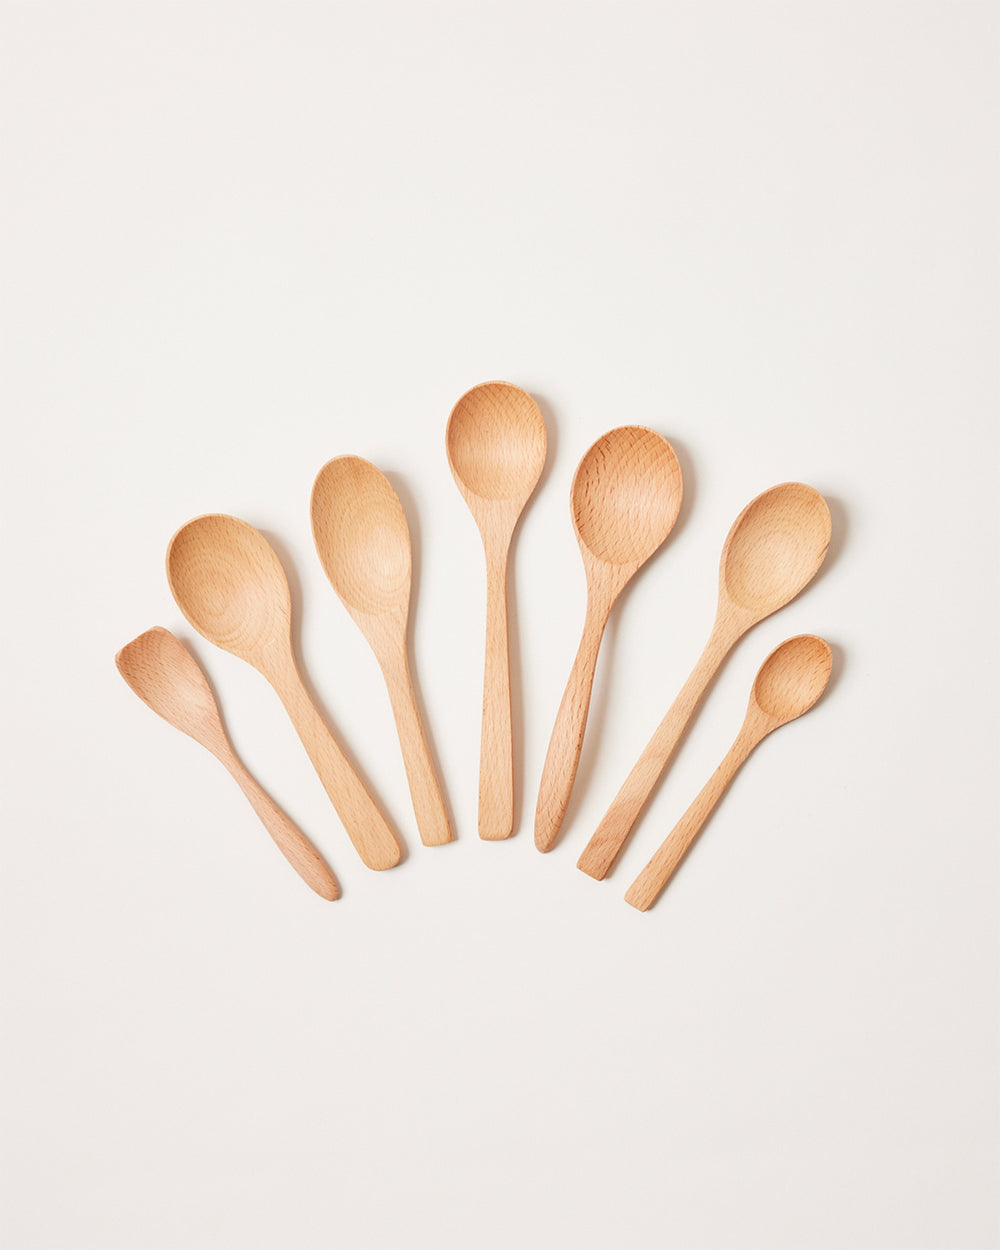 Essential Kitchen Little Spoon - Set of 7